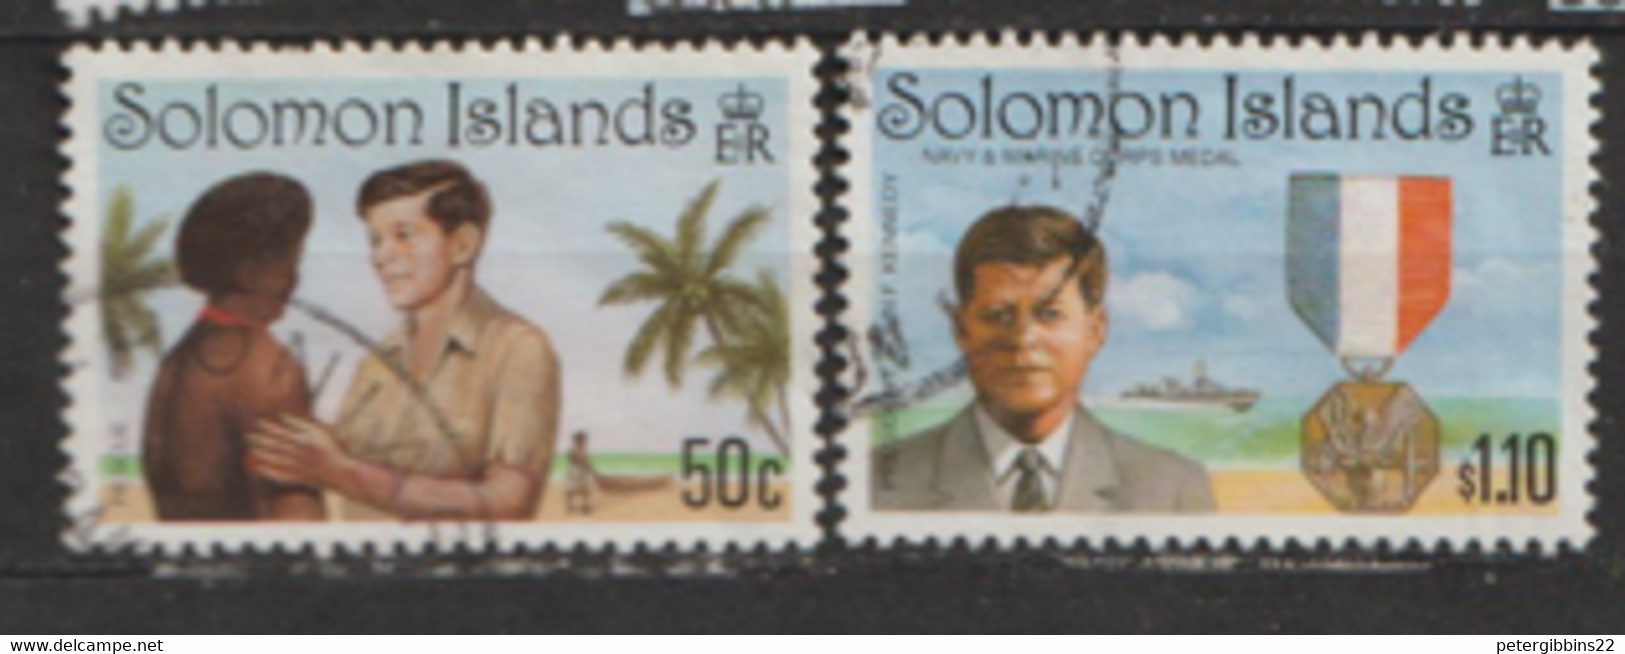 Solomon Islands  1993  SG 776-8  Kennedy  Fine Used - Solomoneilanden